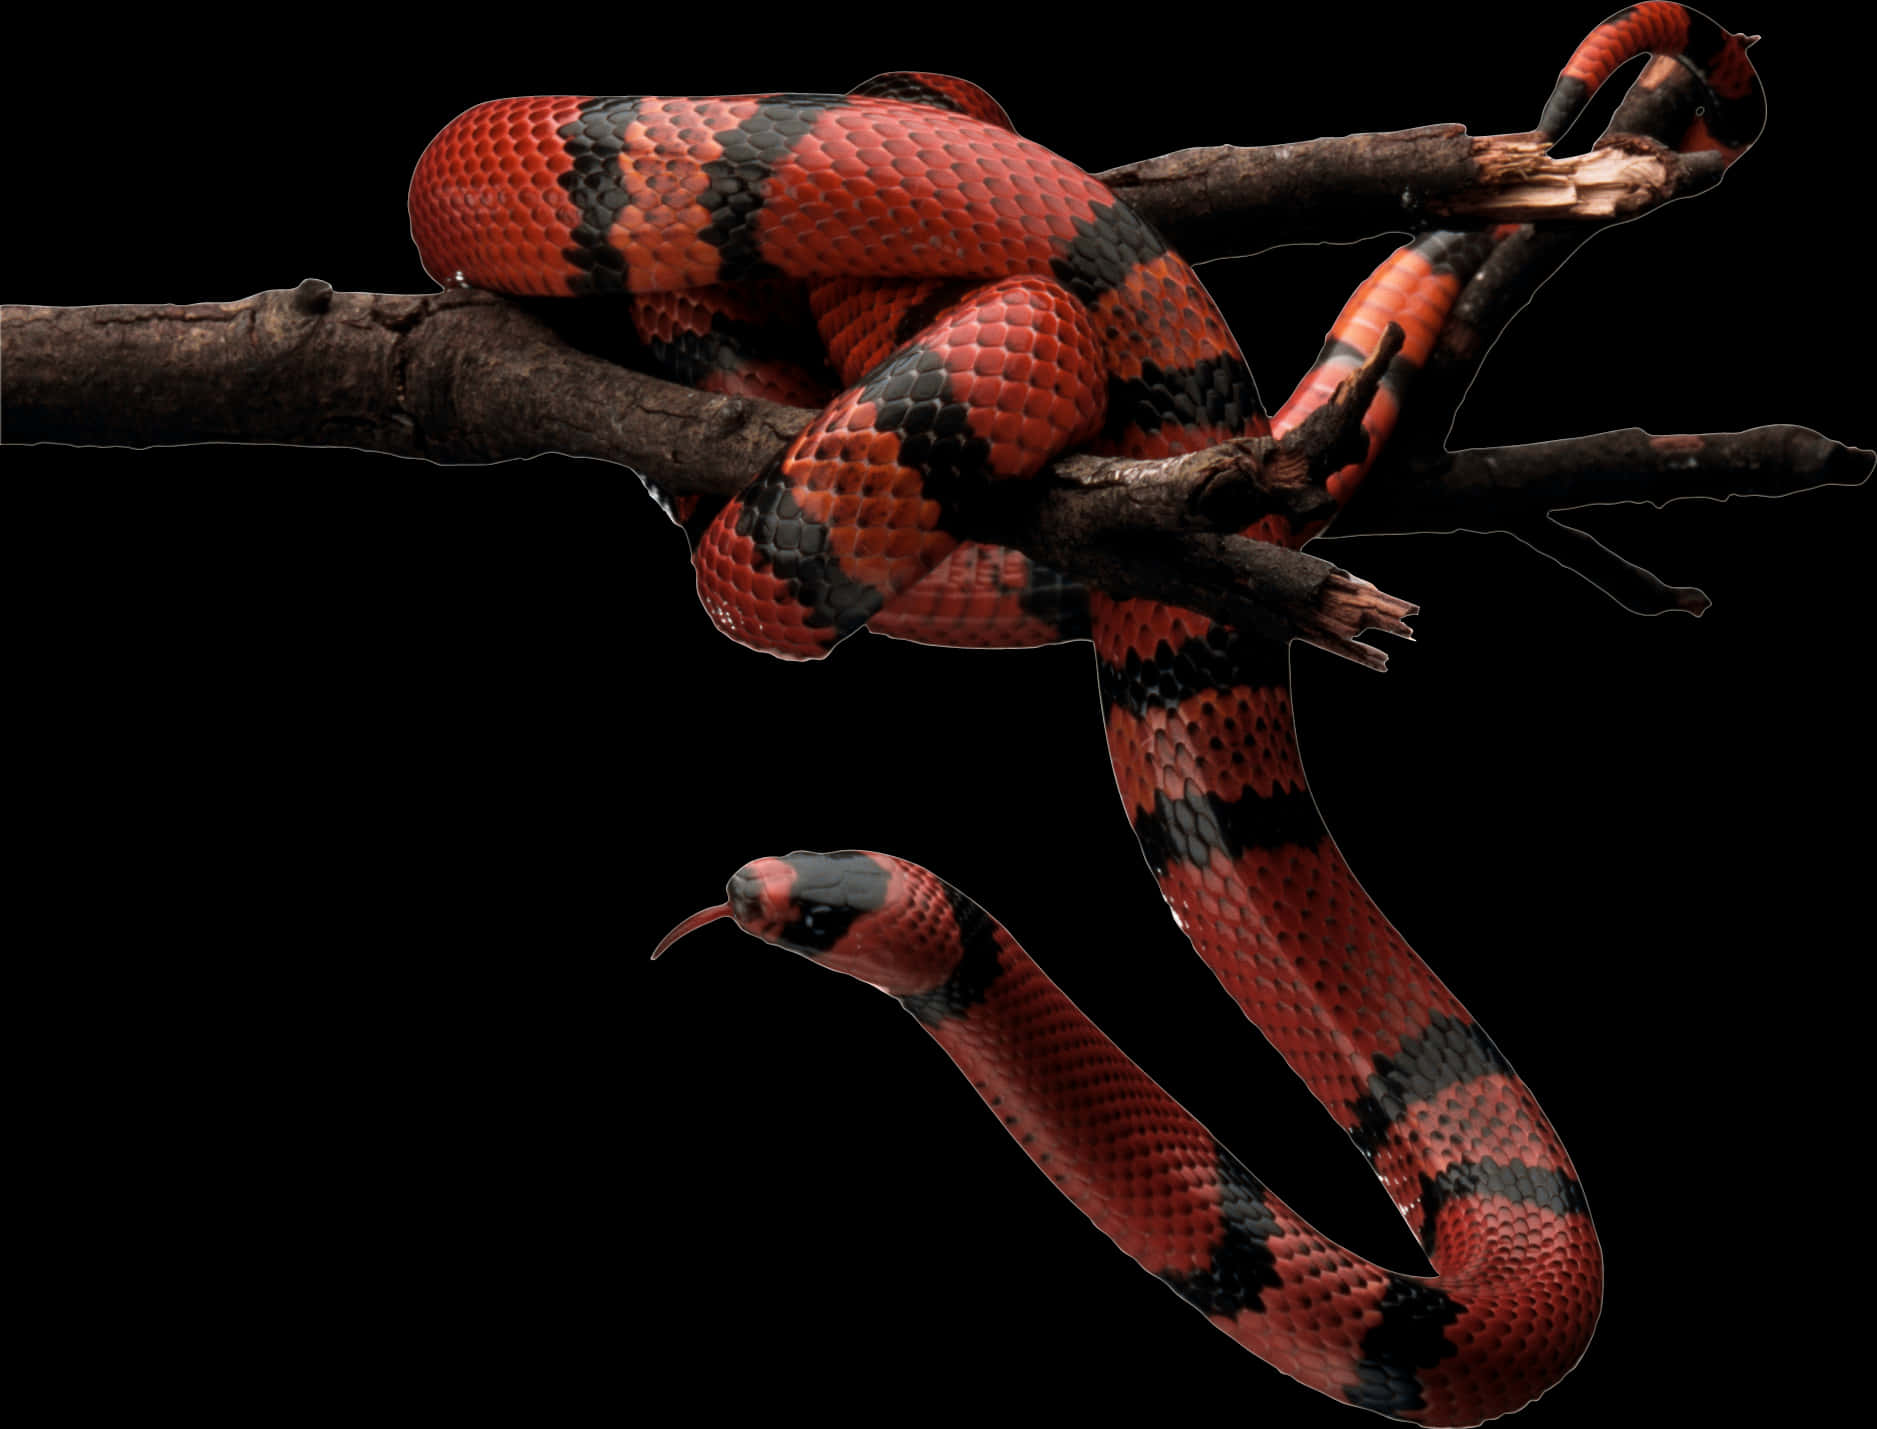 Red Black Snake On Branch.jpg